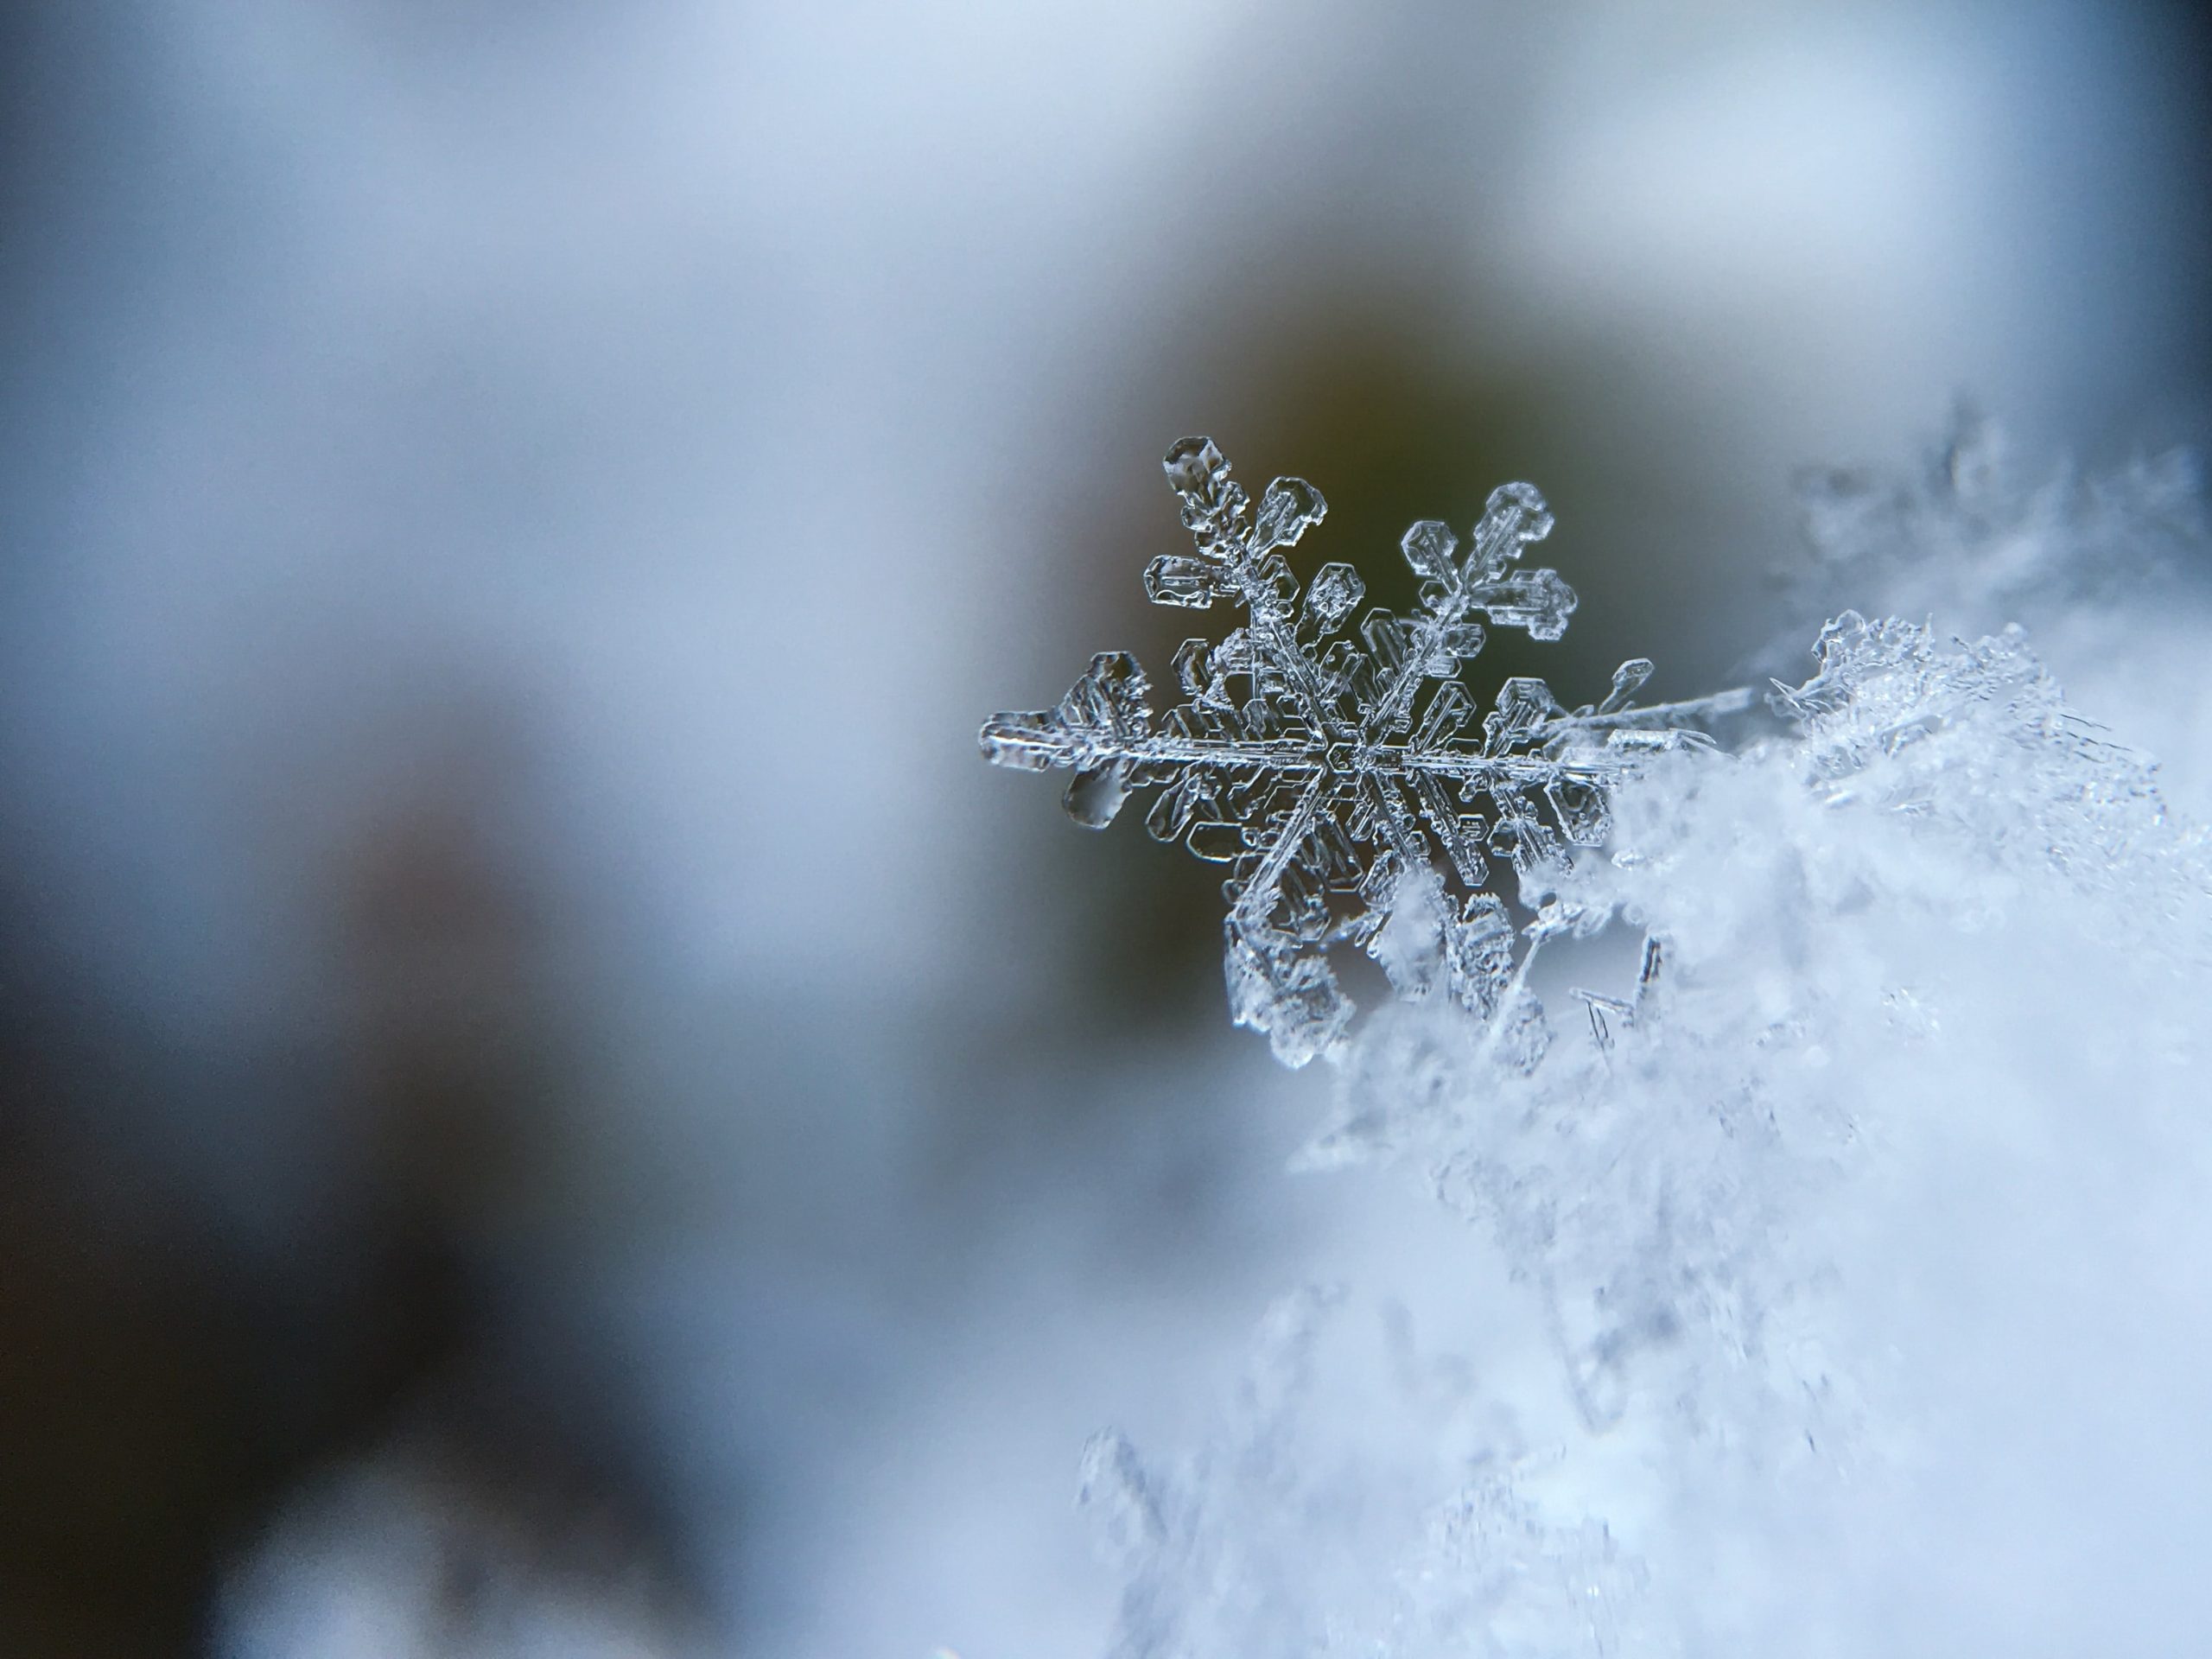 Close-up photograph of a snowflake